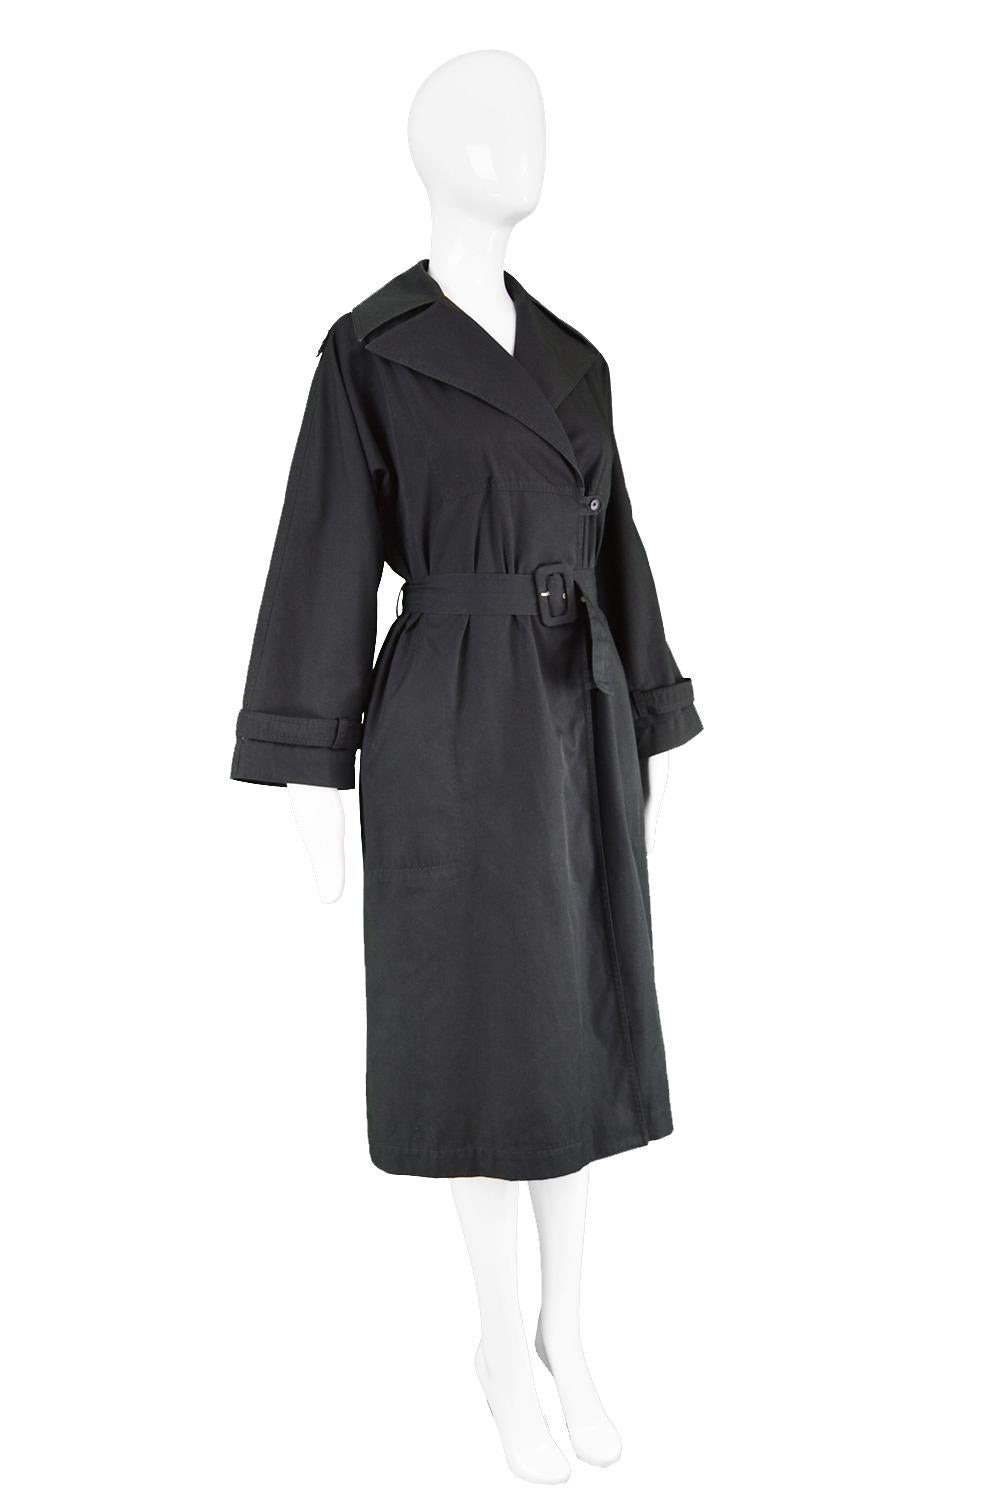 Guy Laroche Vintage Minimalist Women's Black Cotton Trench Coat, 1980s For Sale 2